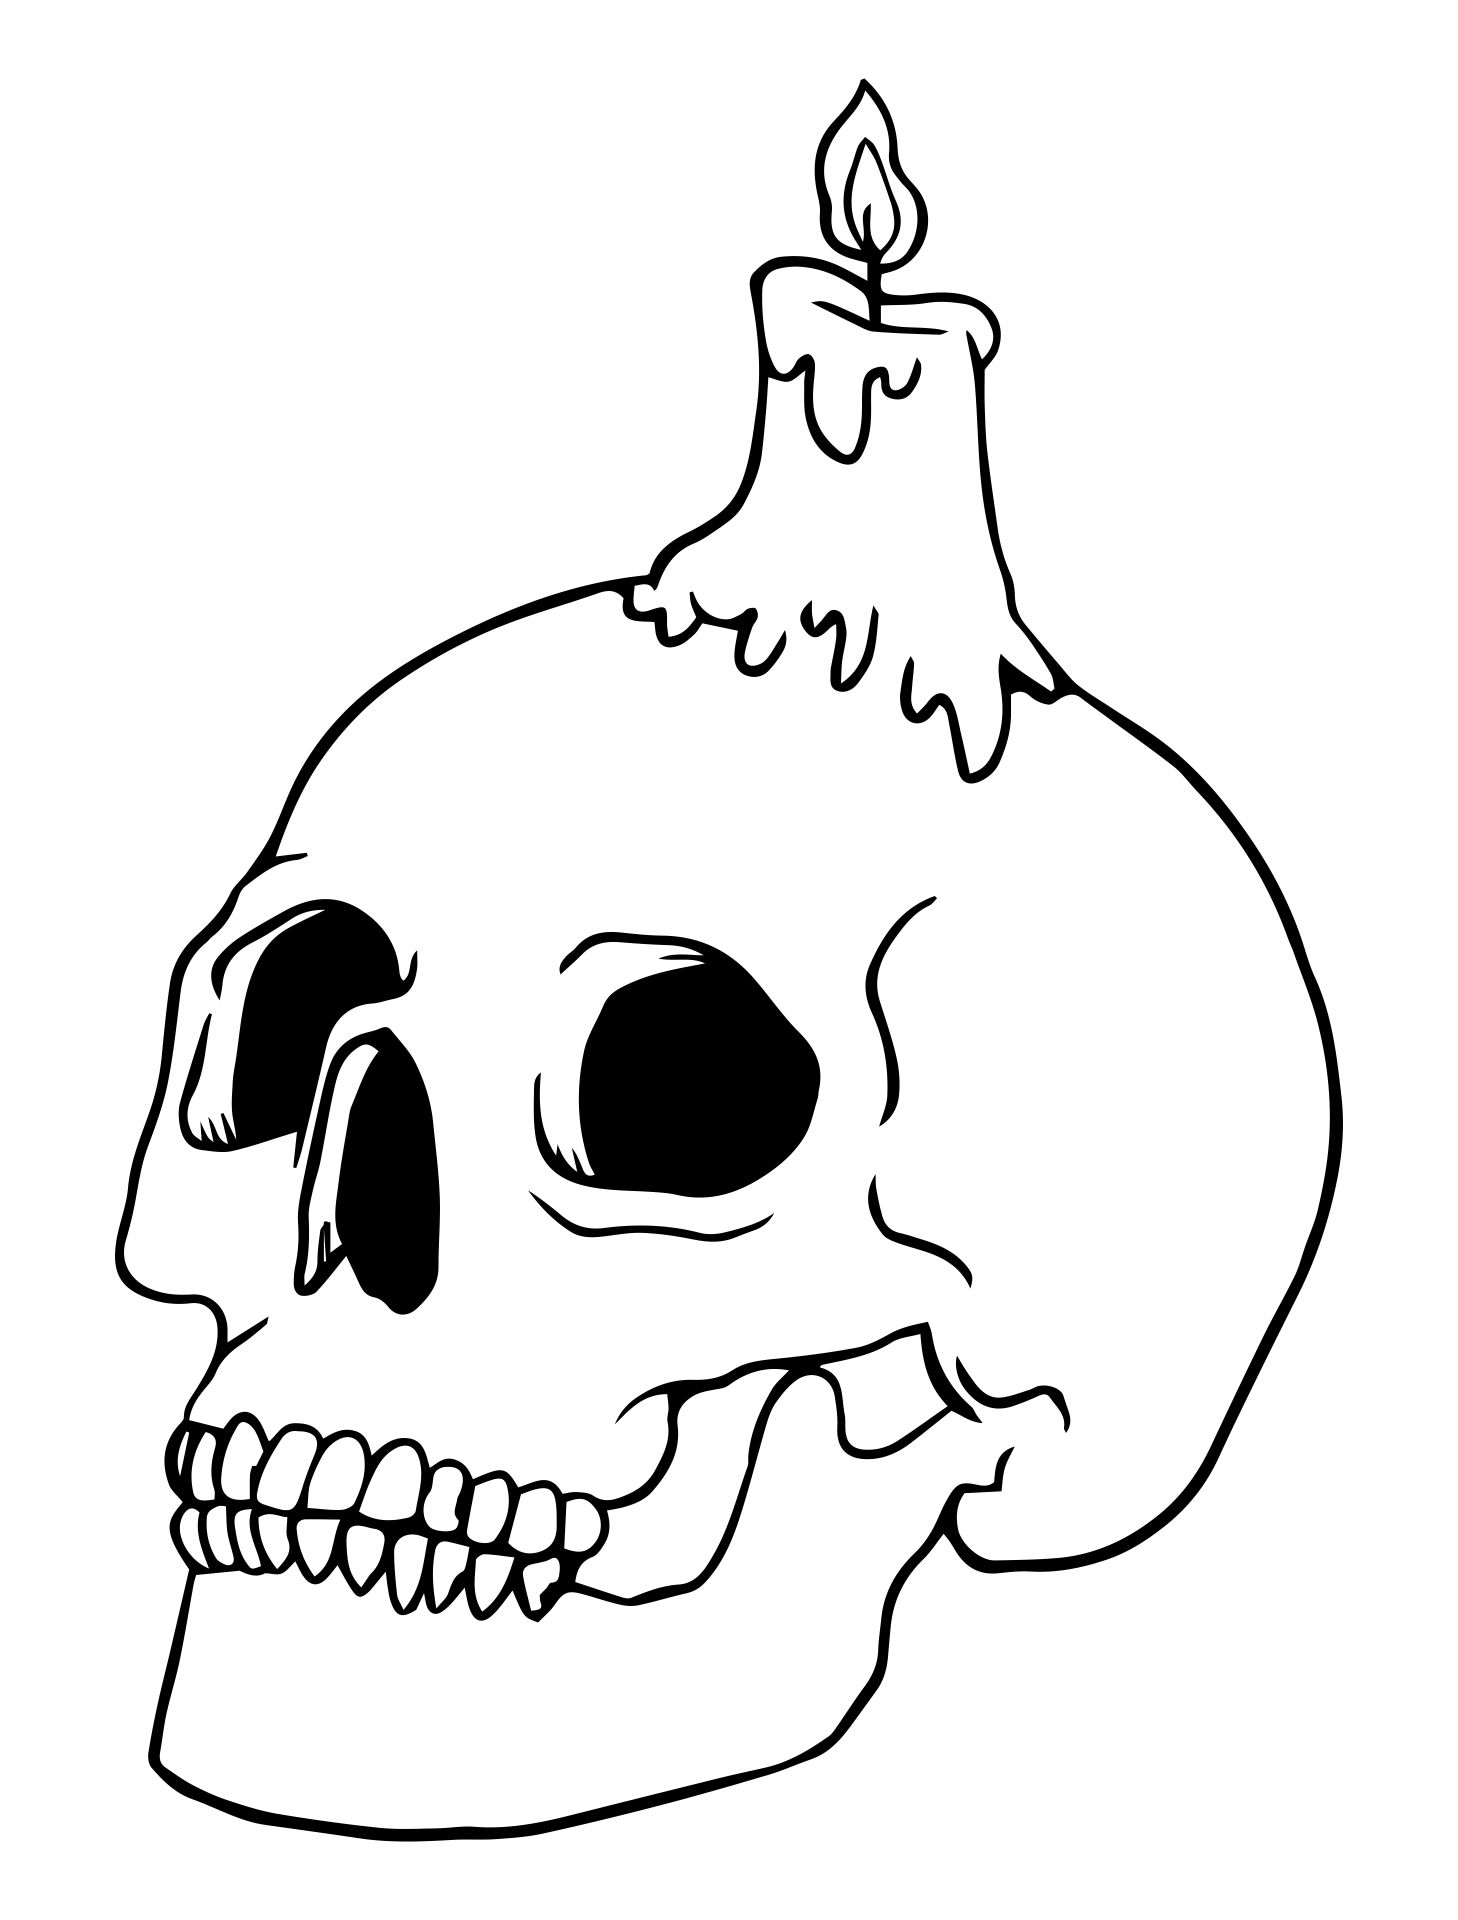 Printable Halloween Skulls